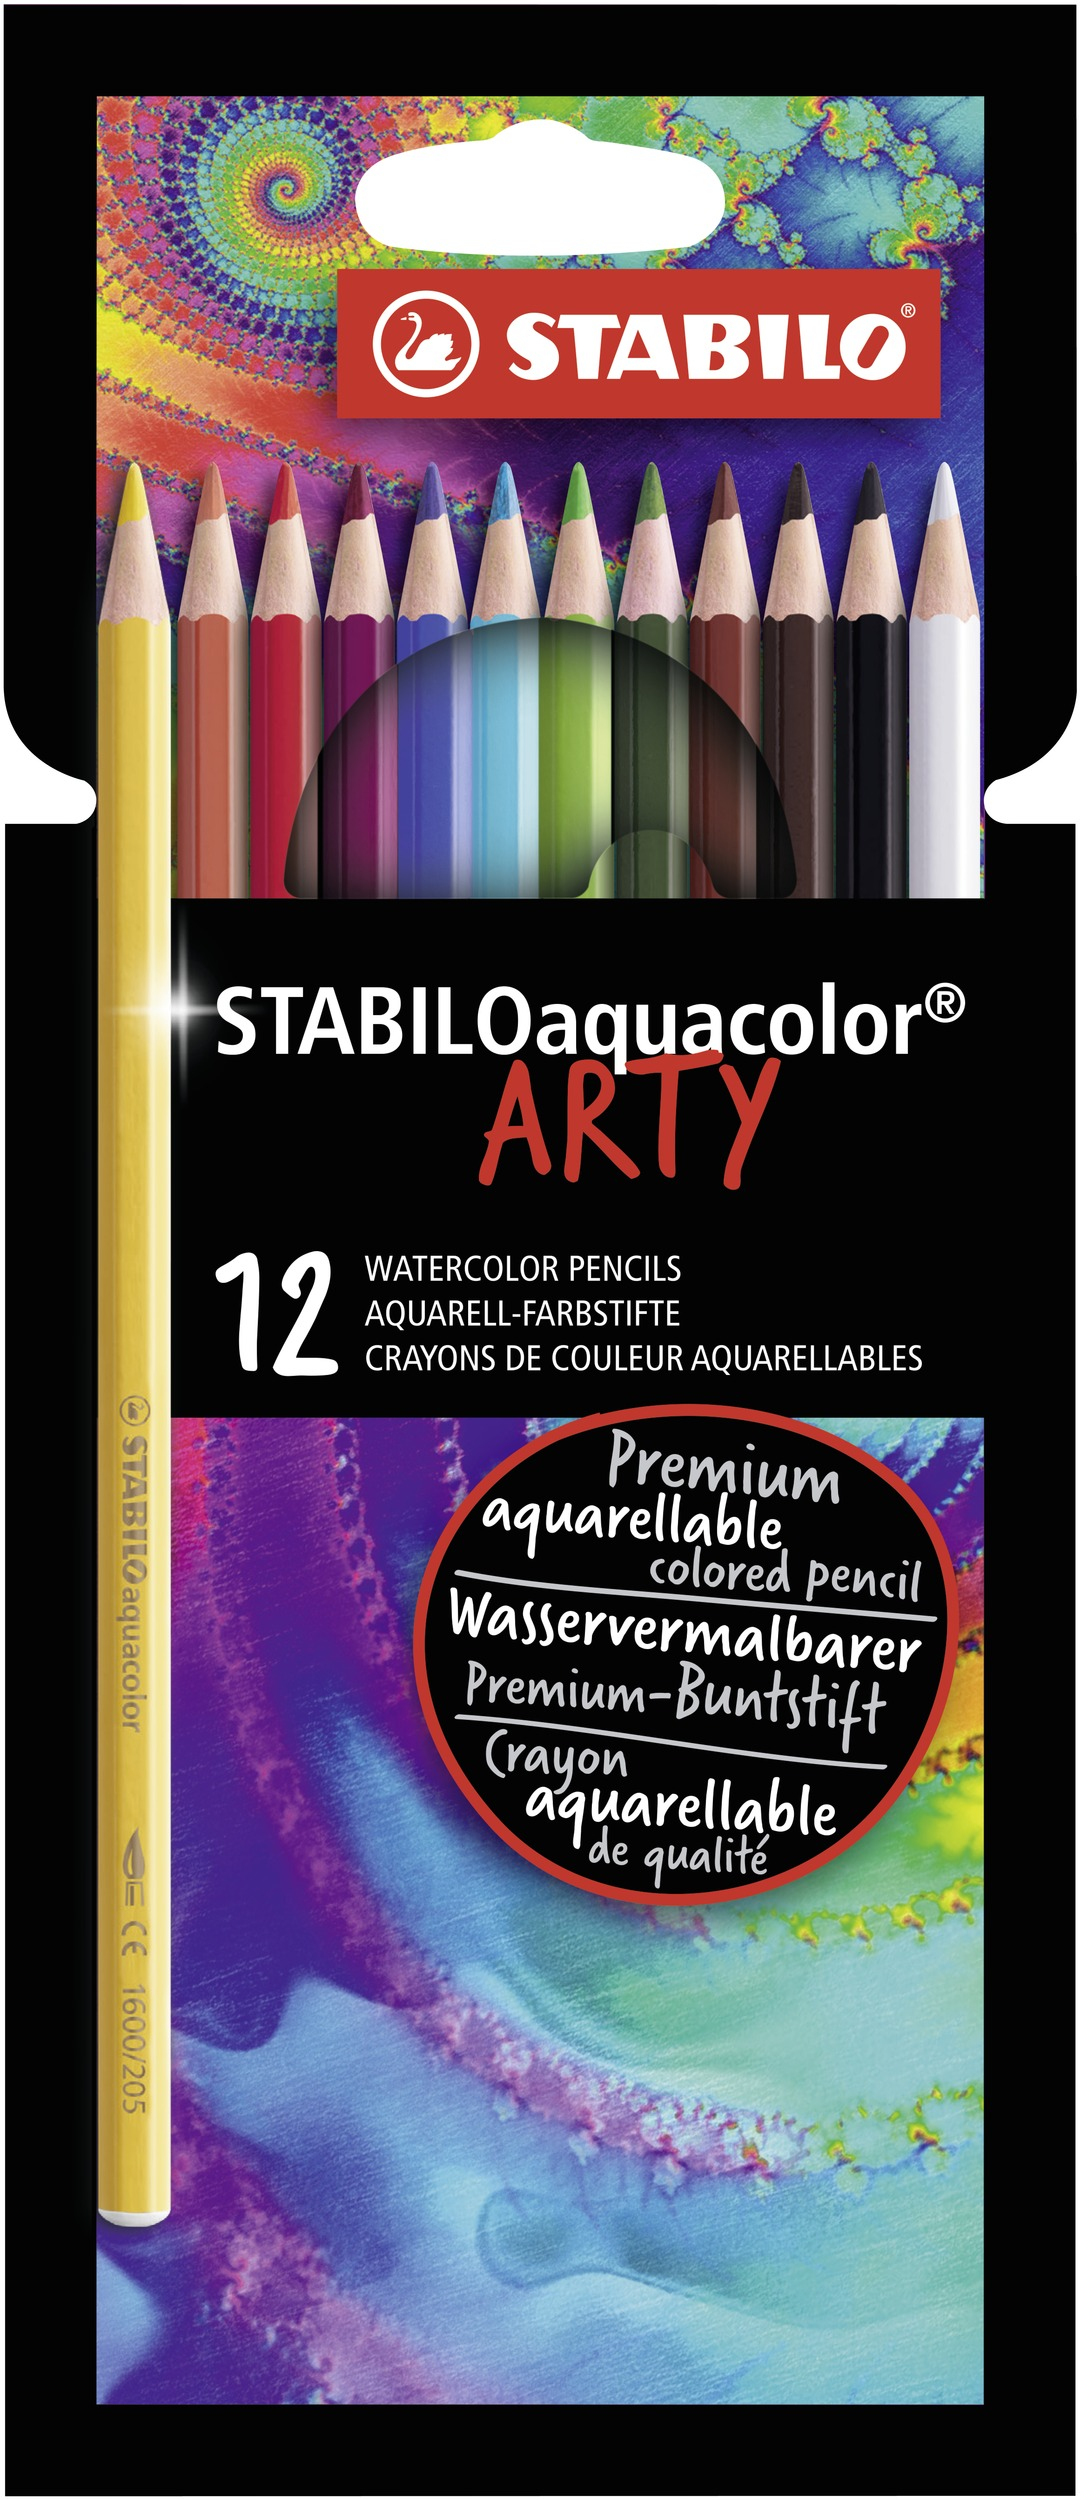 STABILO aquacolor, premium aquarel kleurpotlood, ARTY etui met 12 kleuren